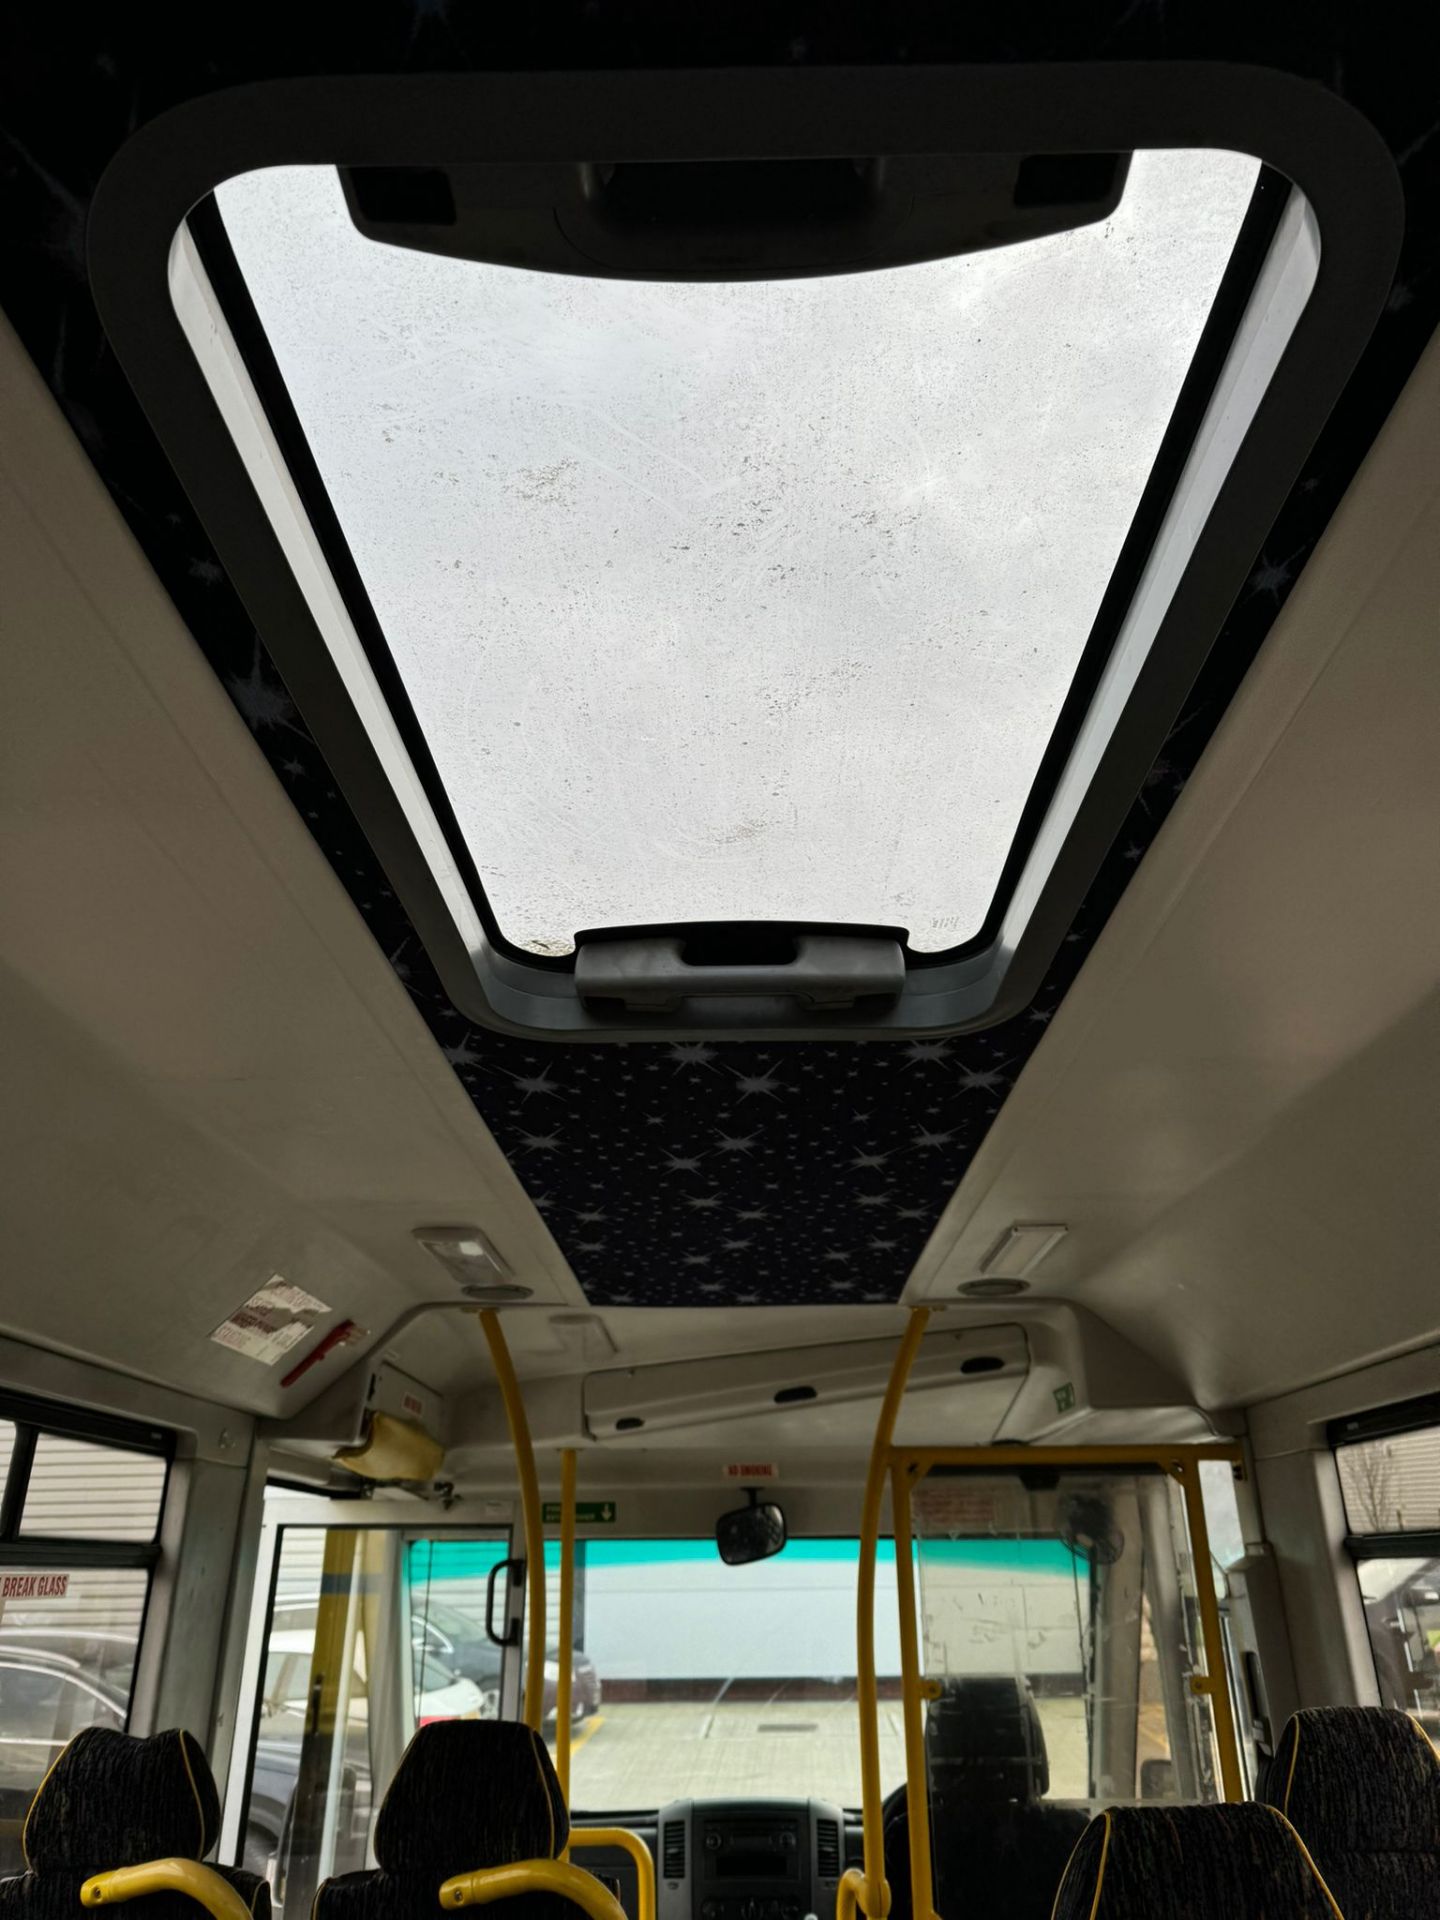 EX-COUNCIL FLEET VEHICLE - 2008, Mercedes-Benz Sprinter (WX08 BGV) Welfare Bus - Image 17 of 25